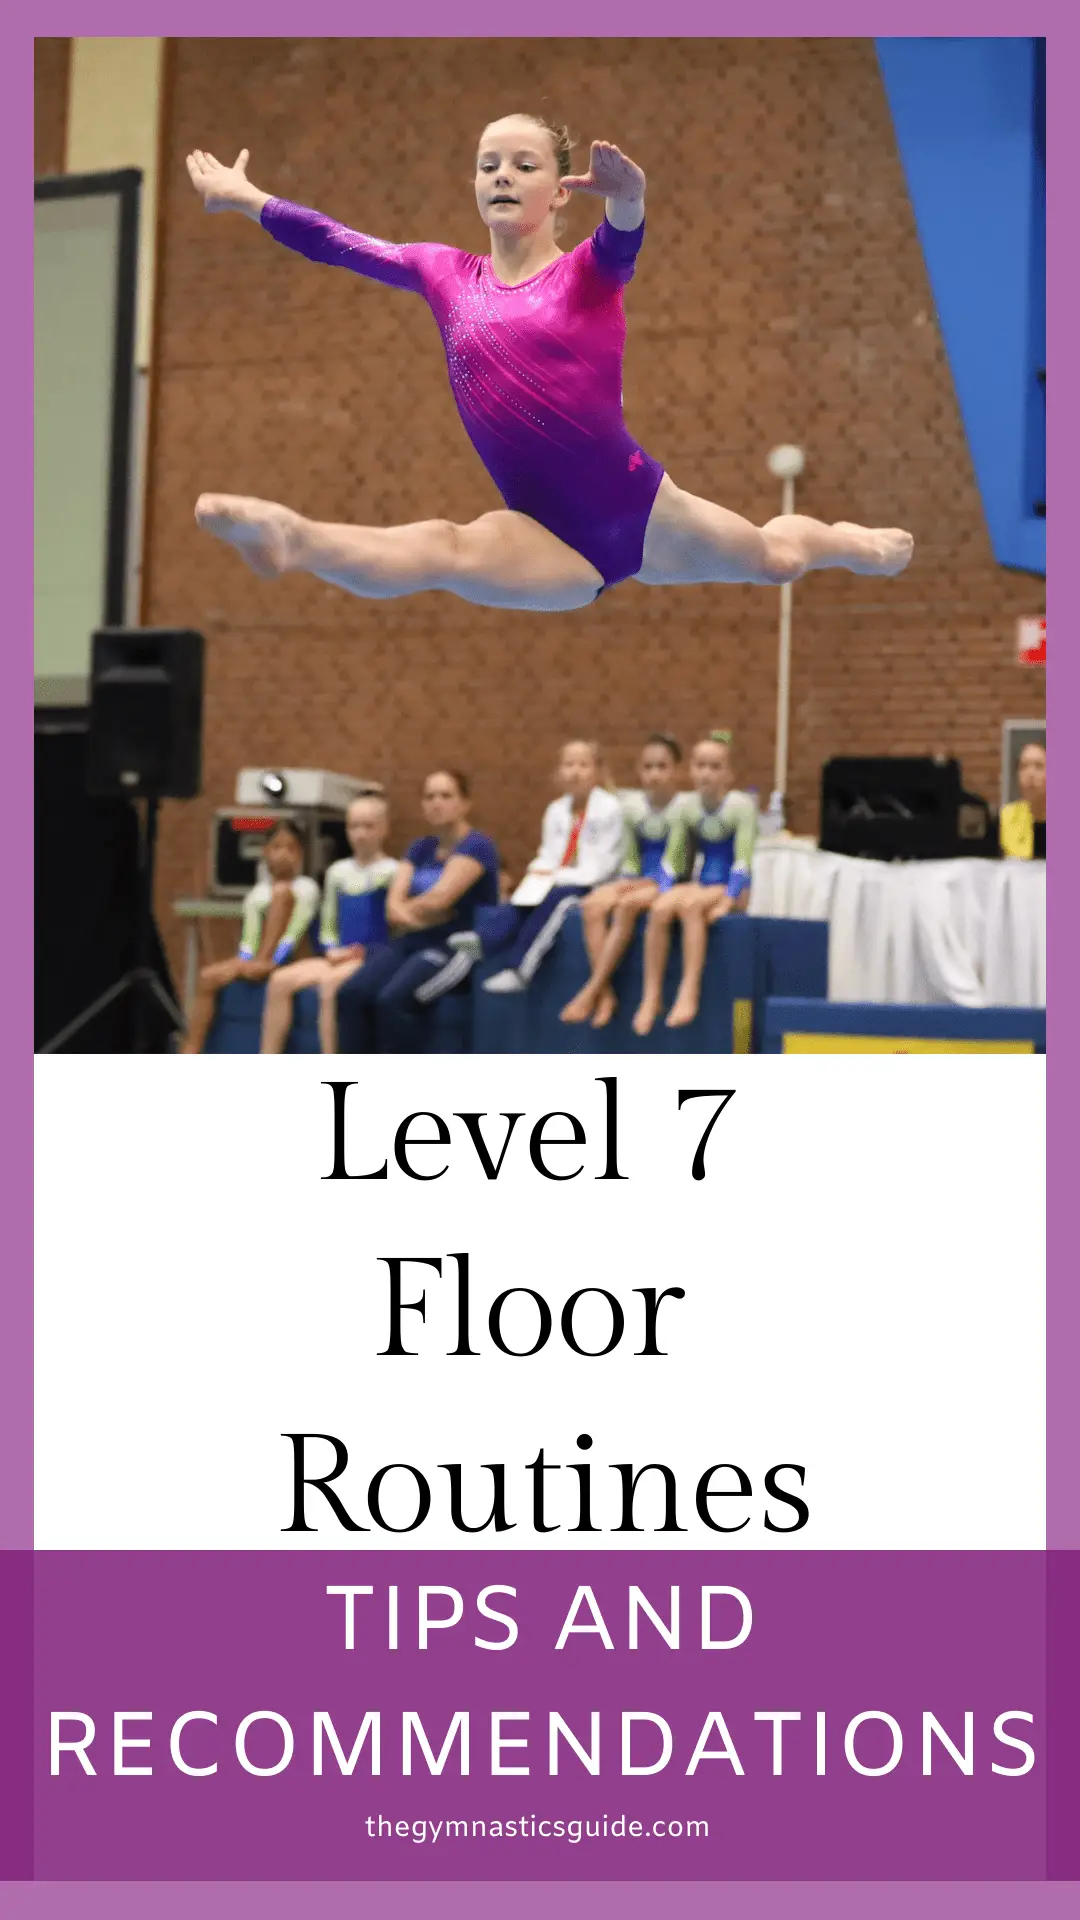 Level 7 Floor Routine Requirements